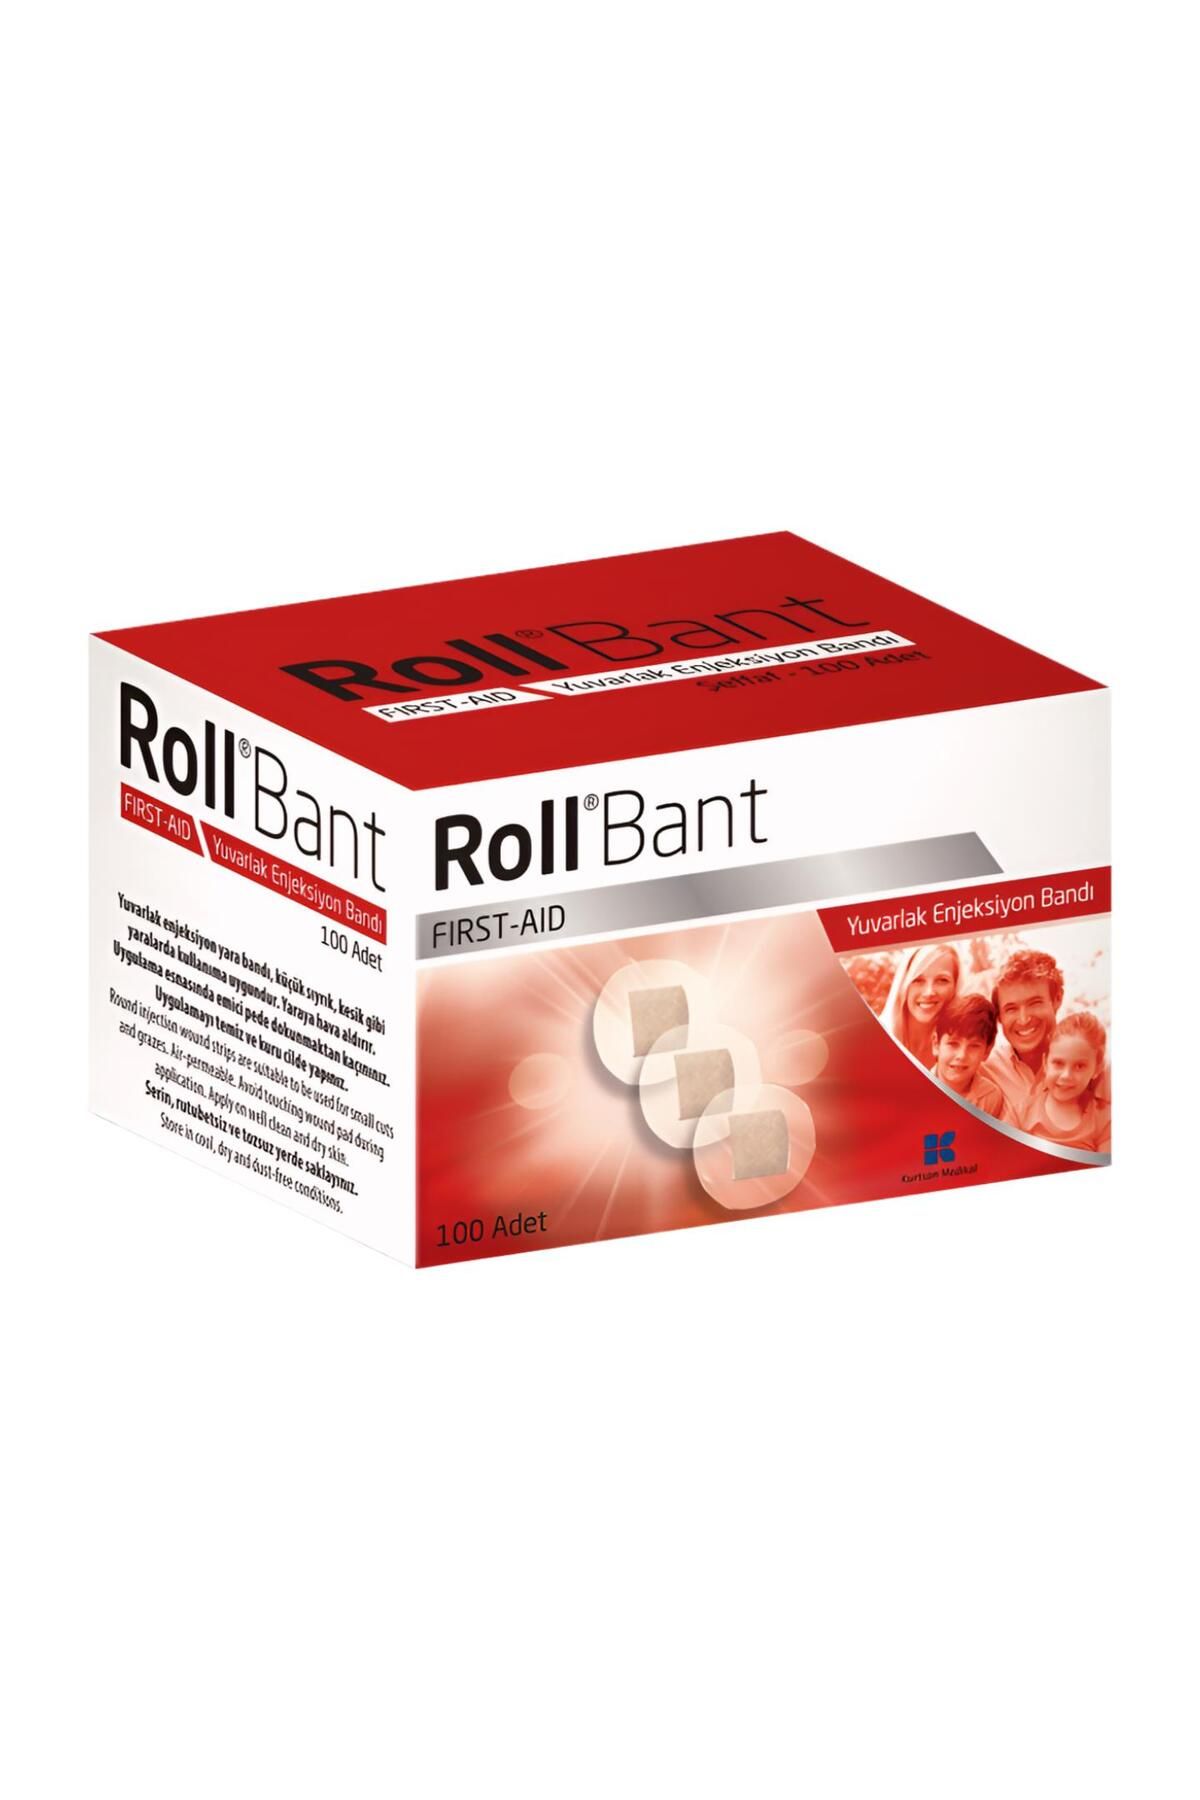 Roll Bant First Aid Yuvarlak Enjeksiyon Bandı